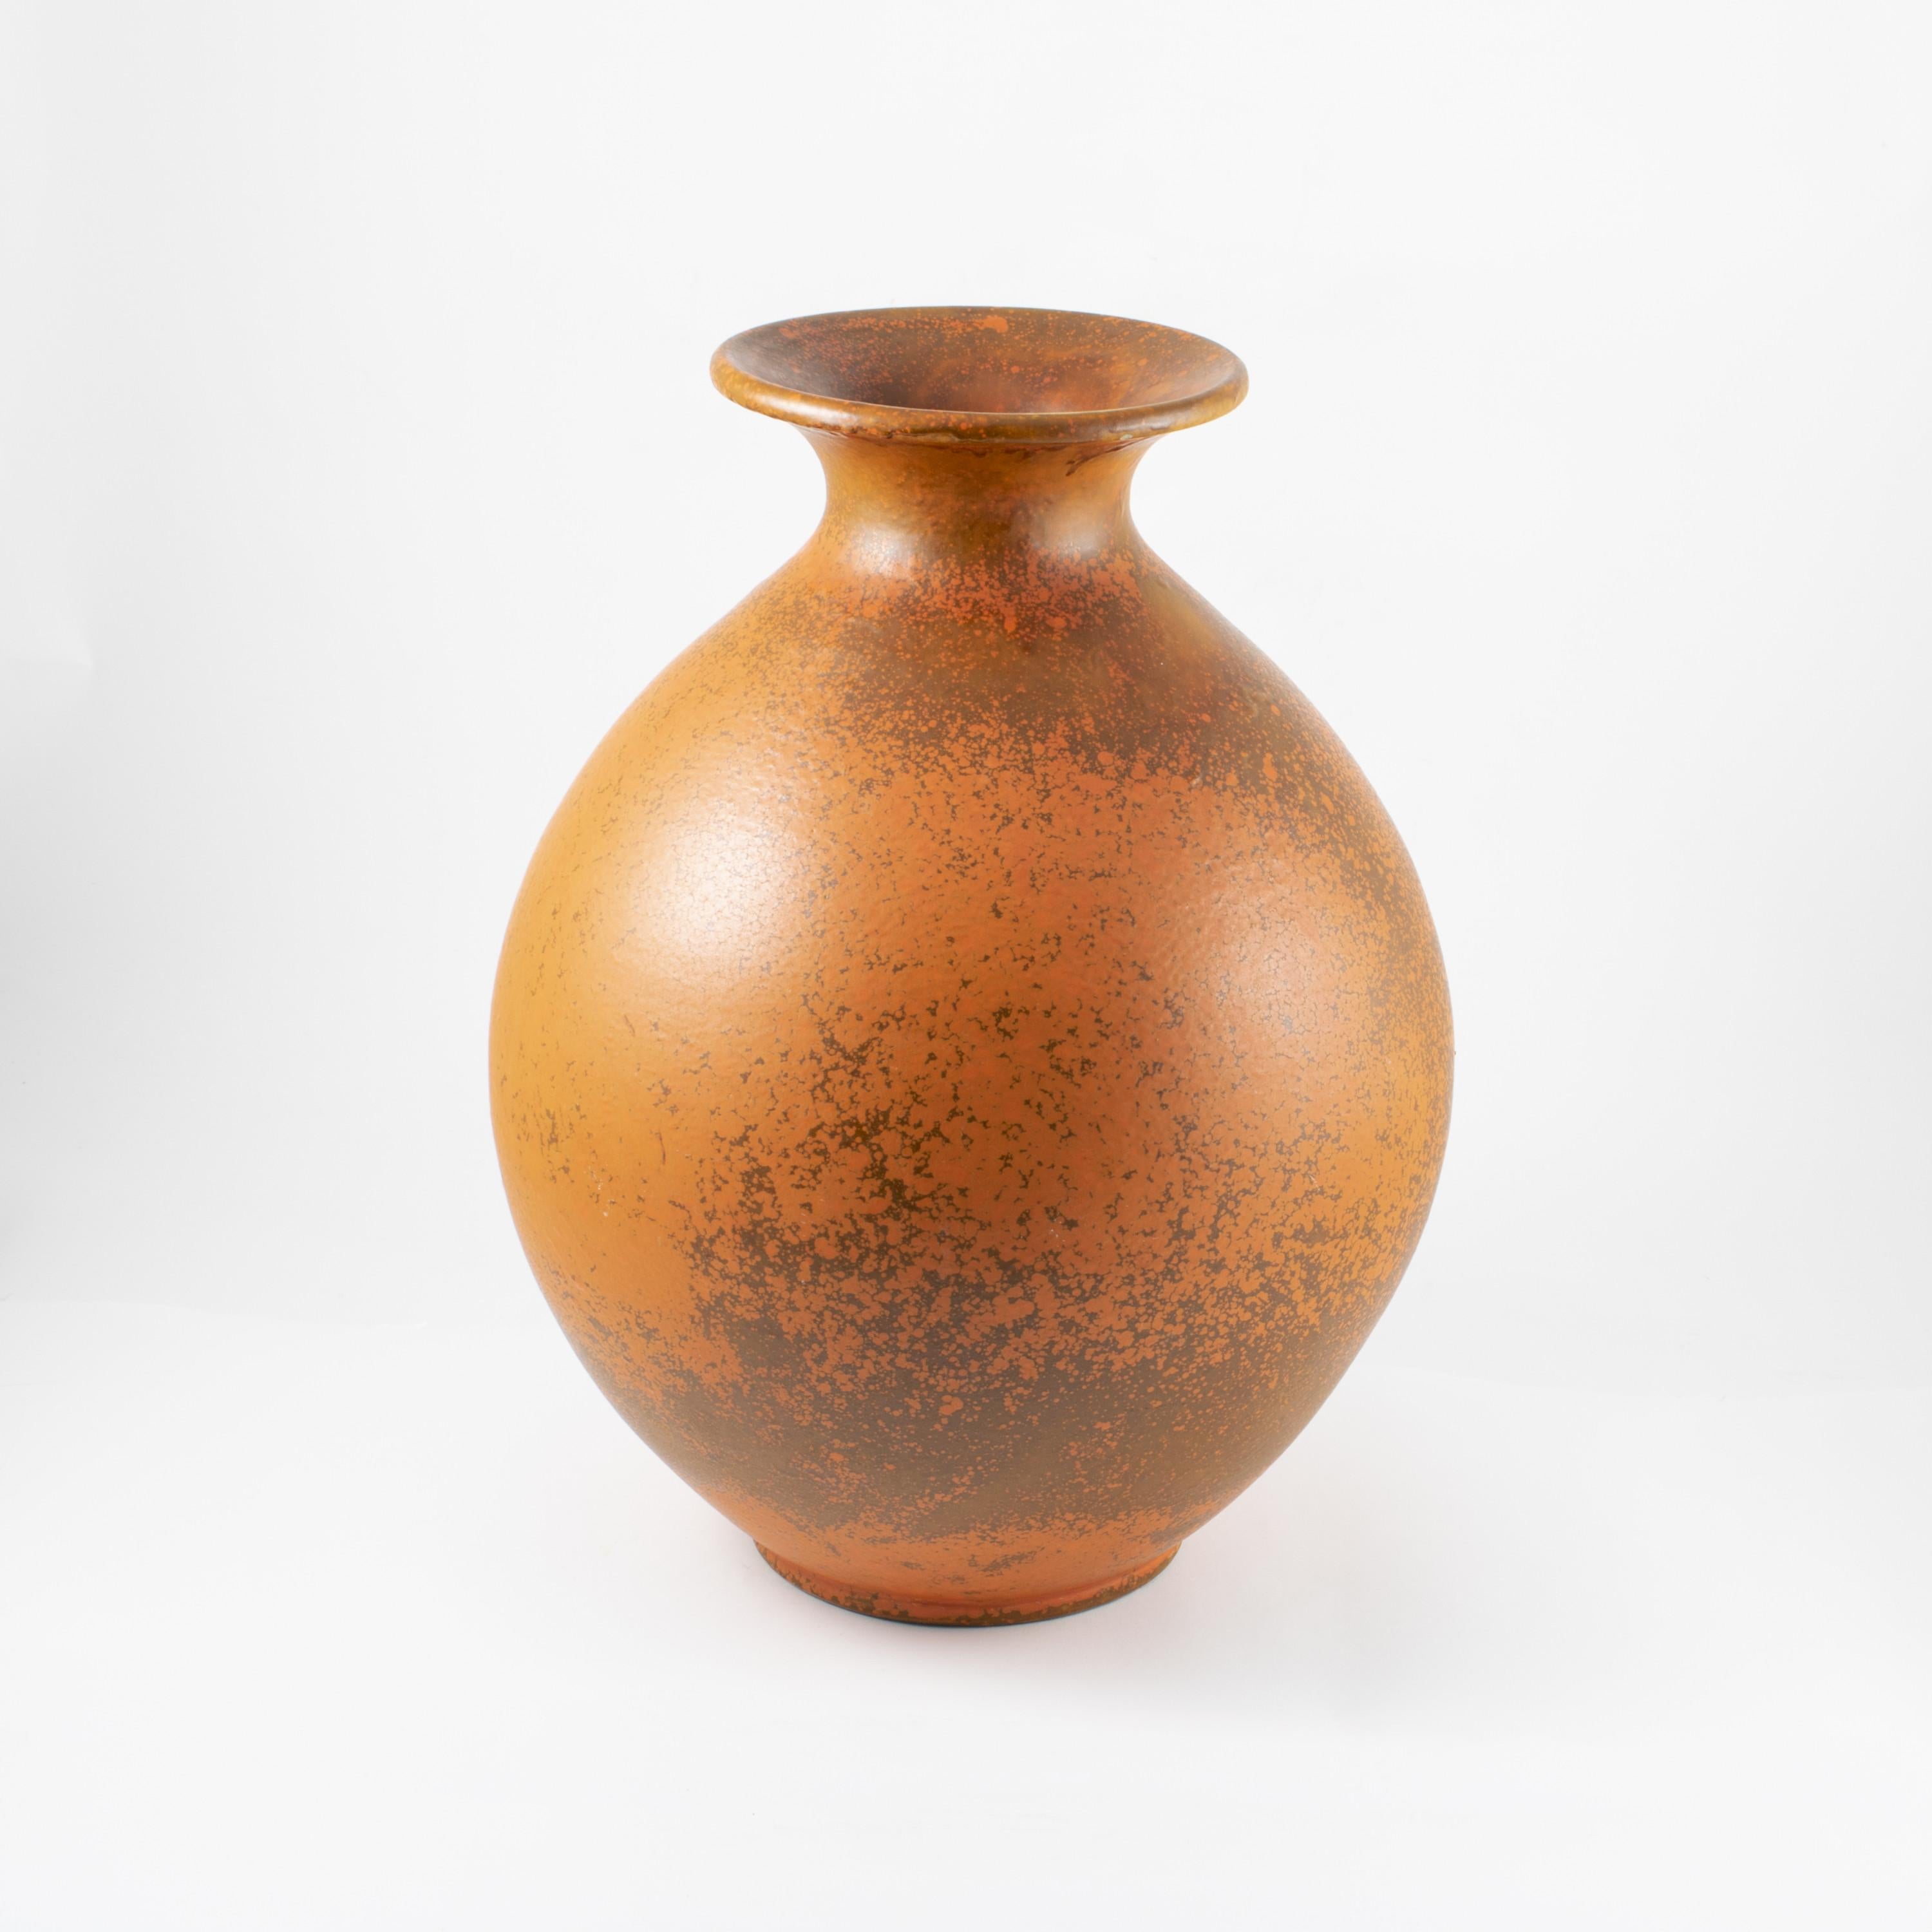 Large rare floor vase in glazed stoneware. Beautiful orange uranium glaze.
Stamped HAK
Denmark, 1920-1930
In very good condition.
 